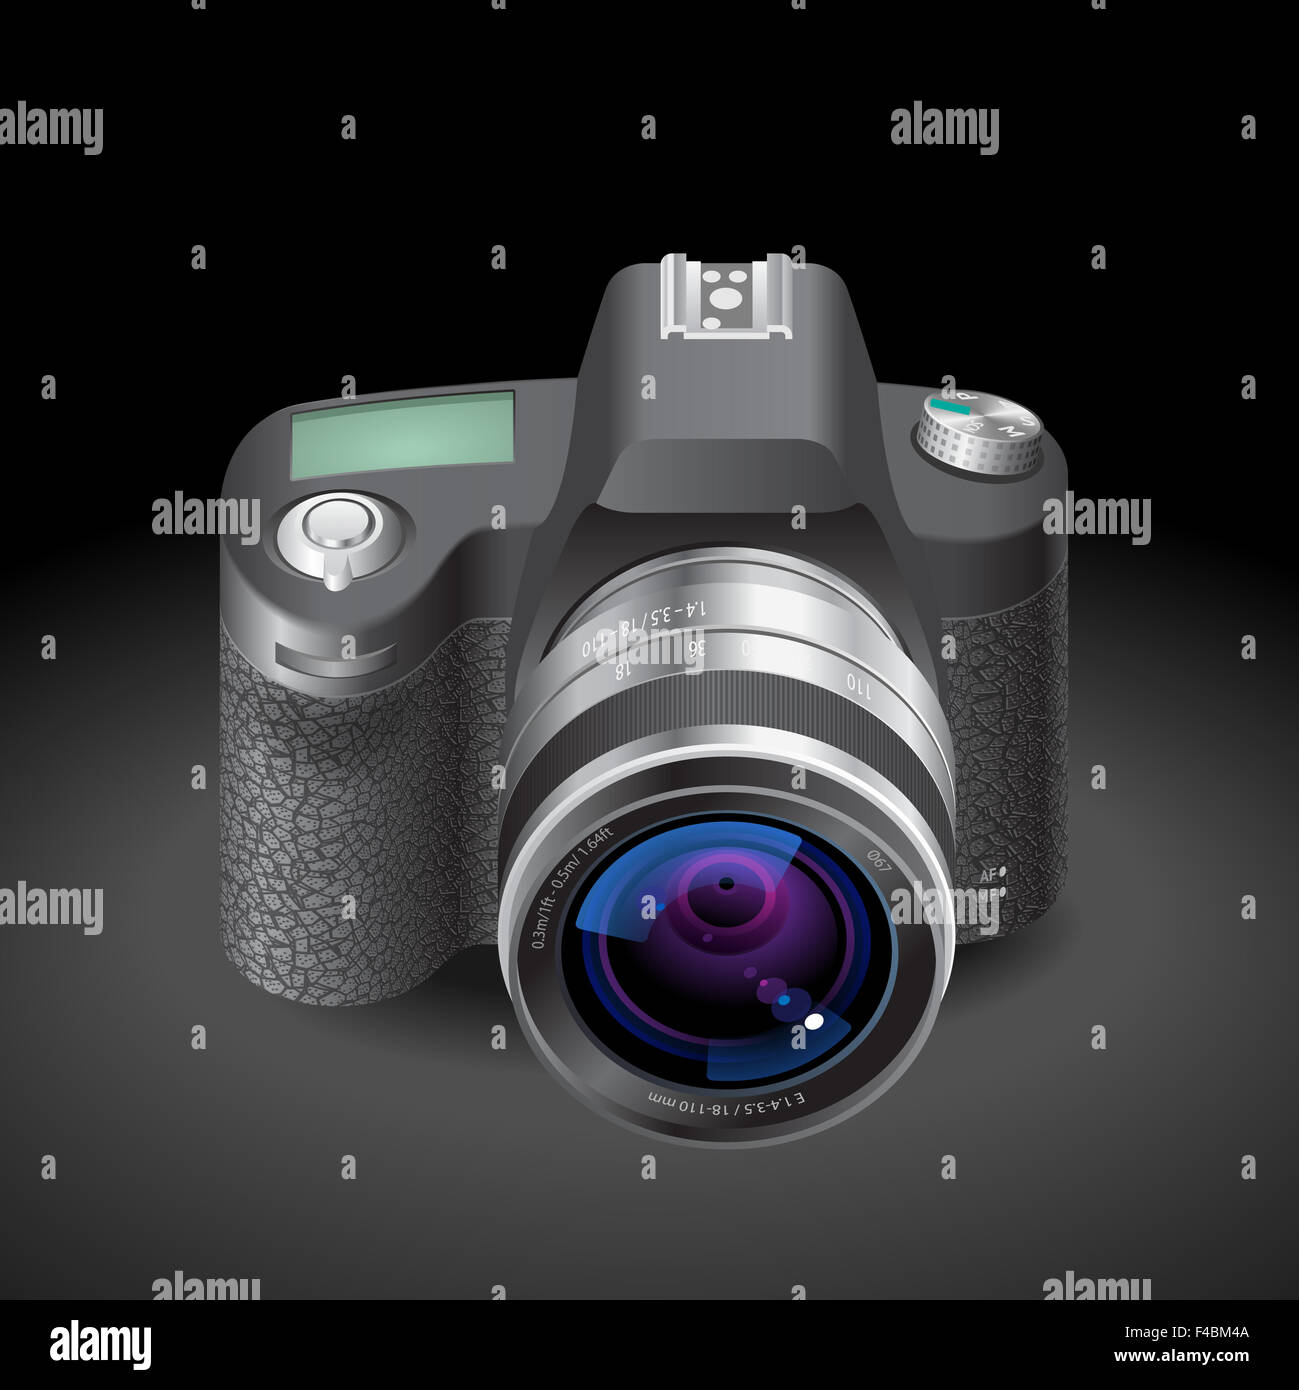 Icon for SLR camera Stock Photo